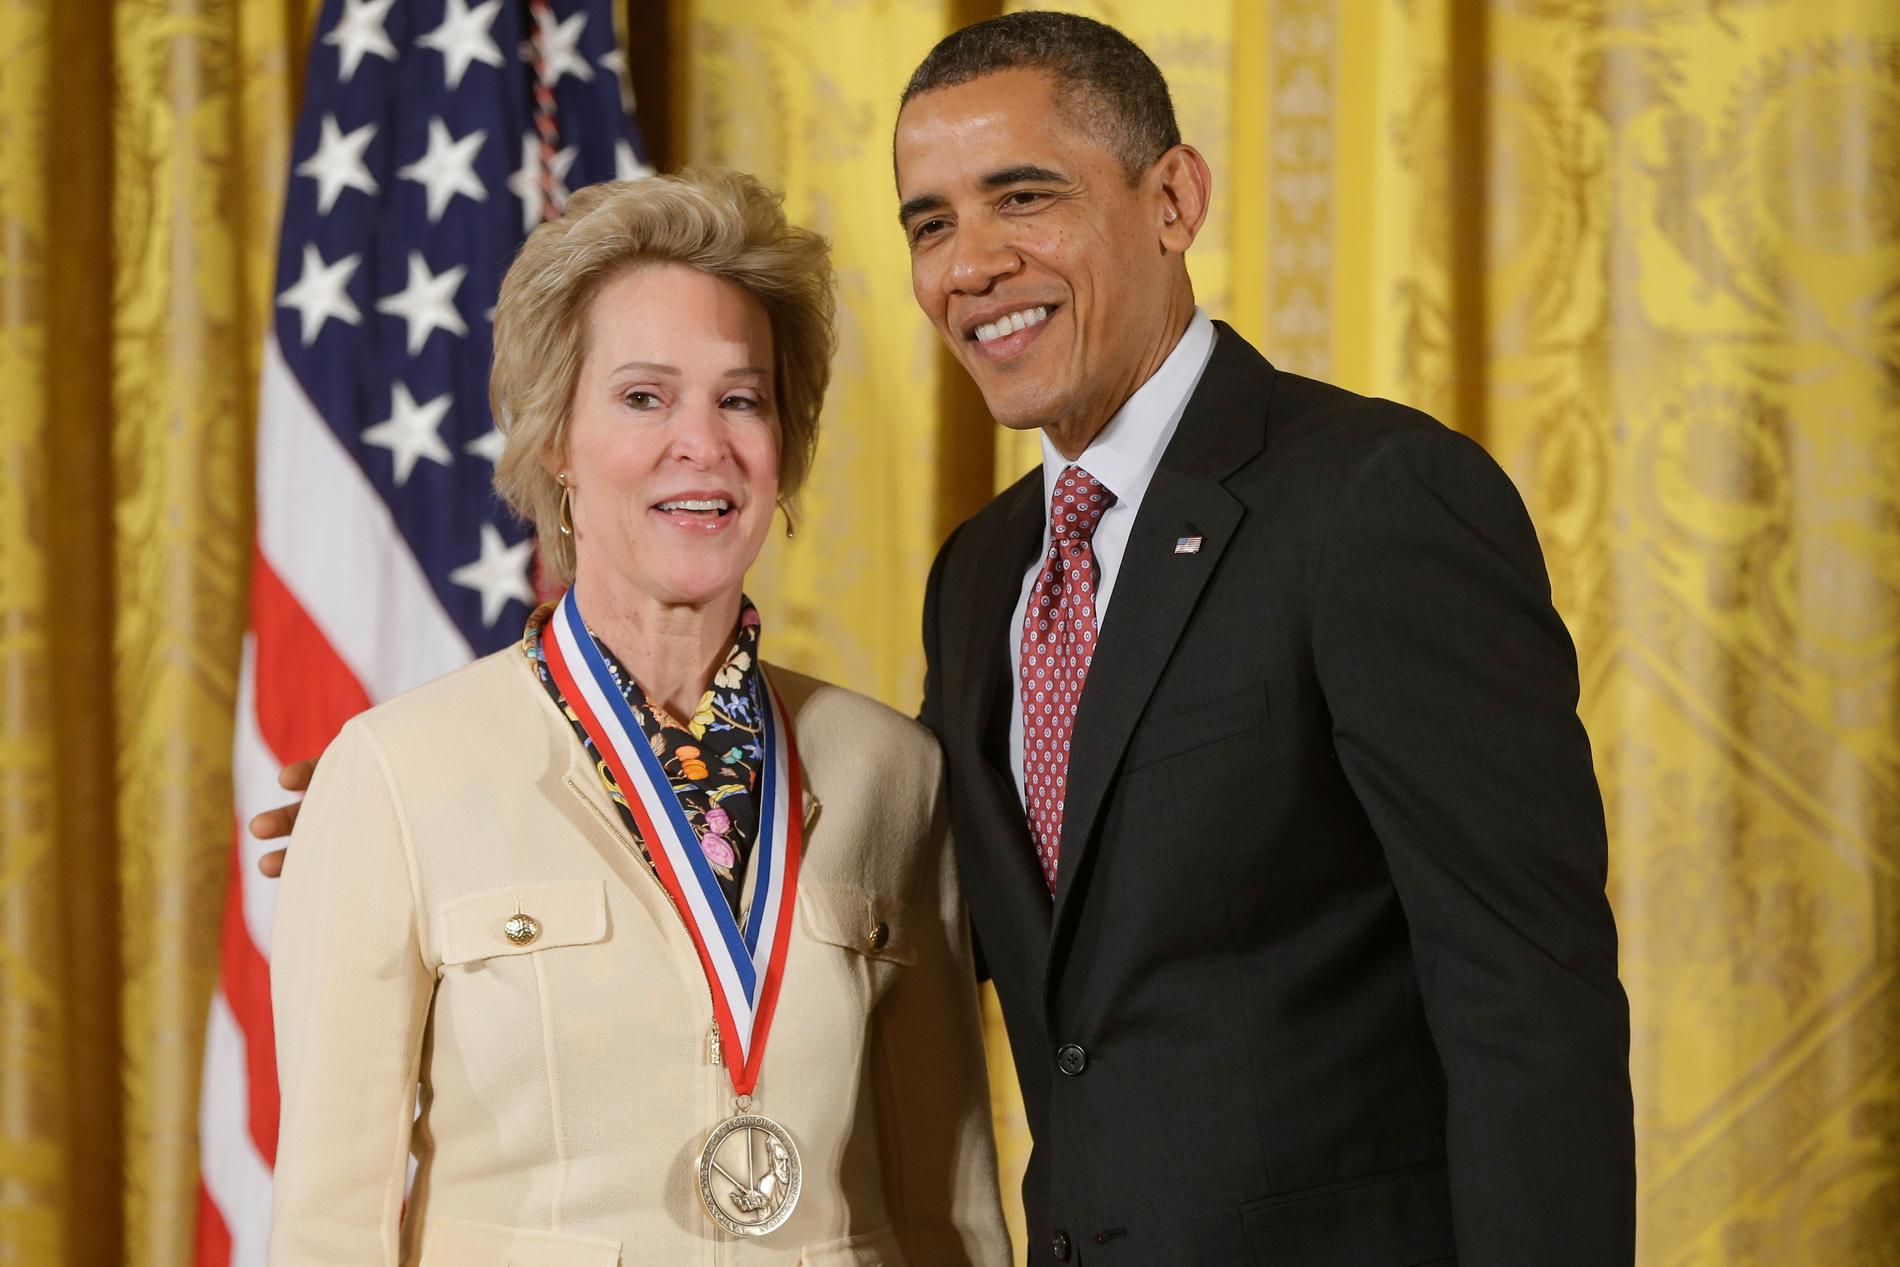 En av många utmärkelser som tilldelats Frances Arnold är National Medal of Technology and Innovation. Priset delades ut av dåvarande presidenten Barack Obama.